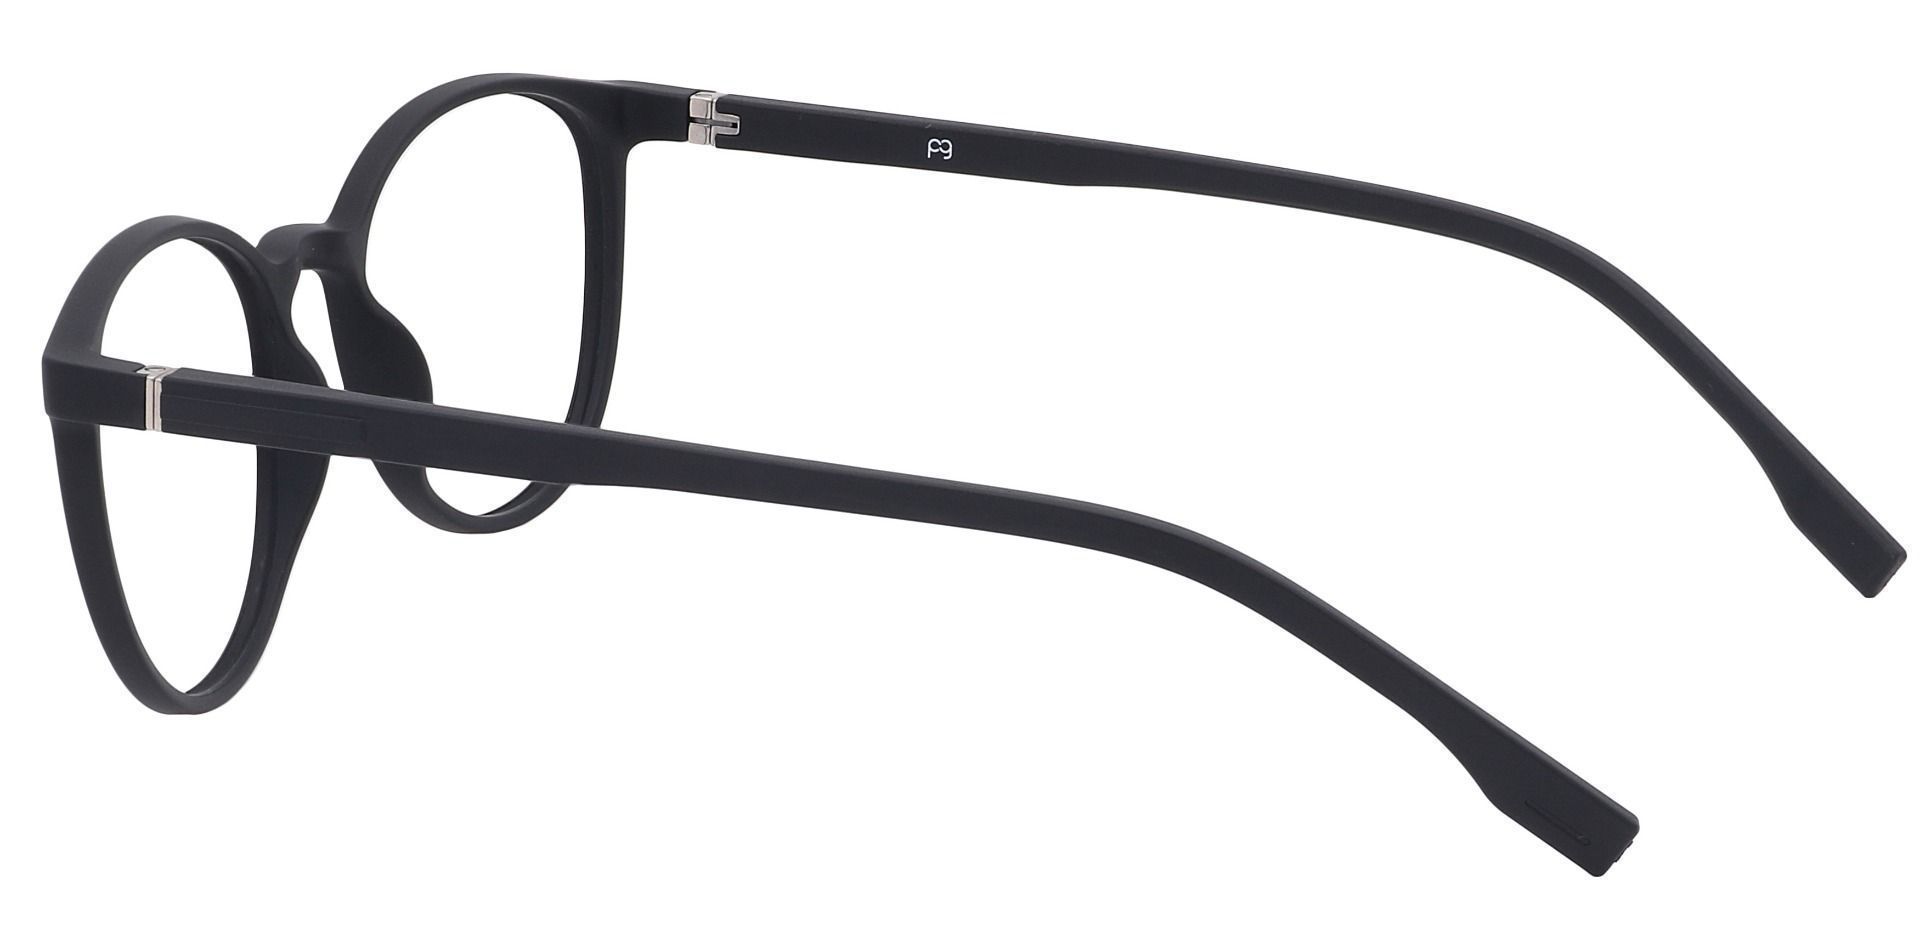 Bay Round Eyeglasses Frame - Matte Black